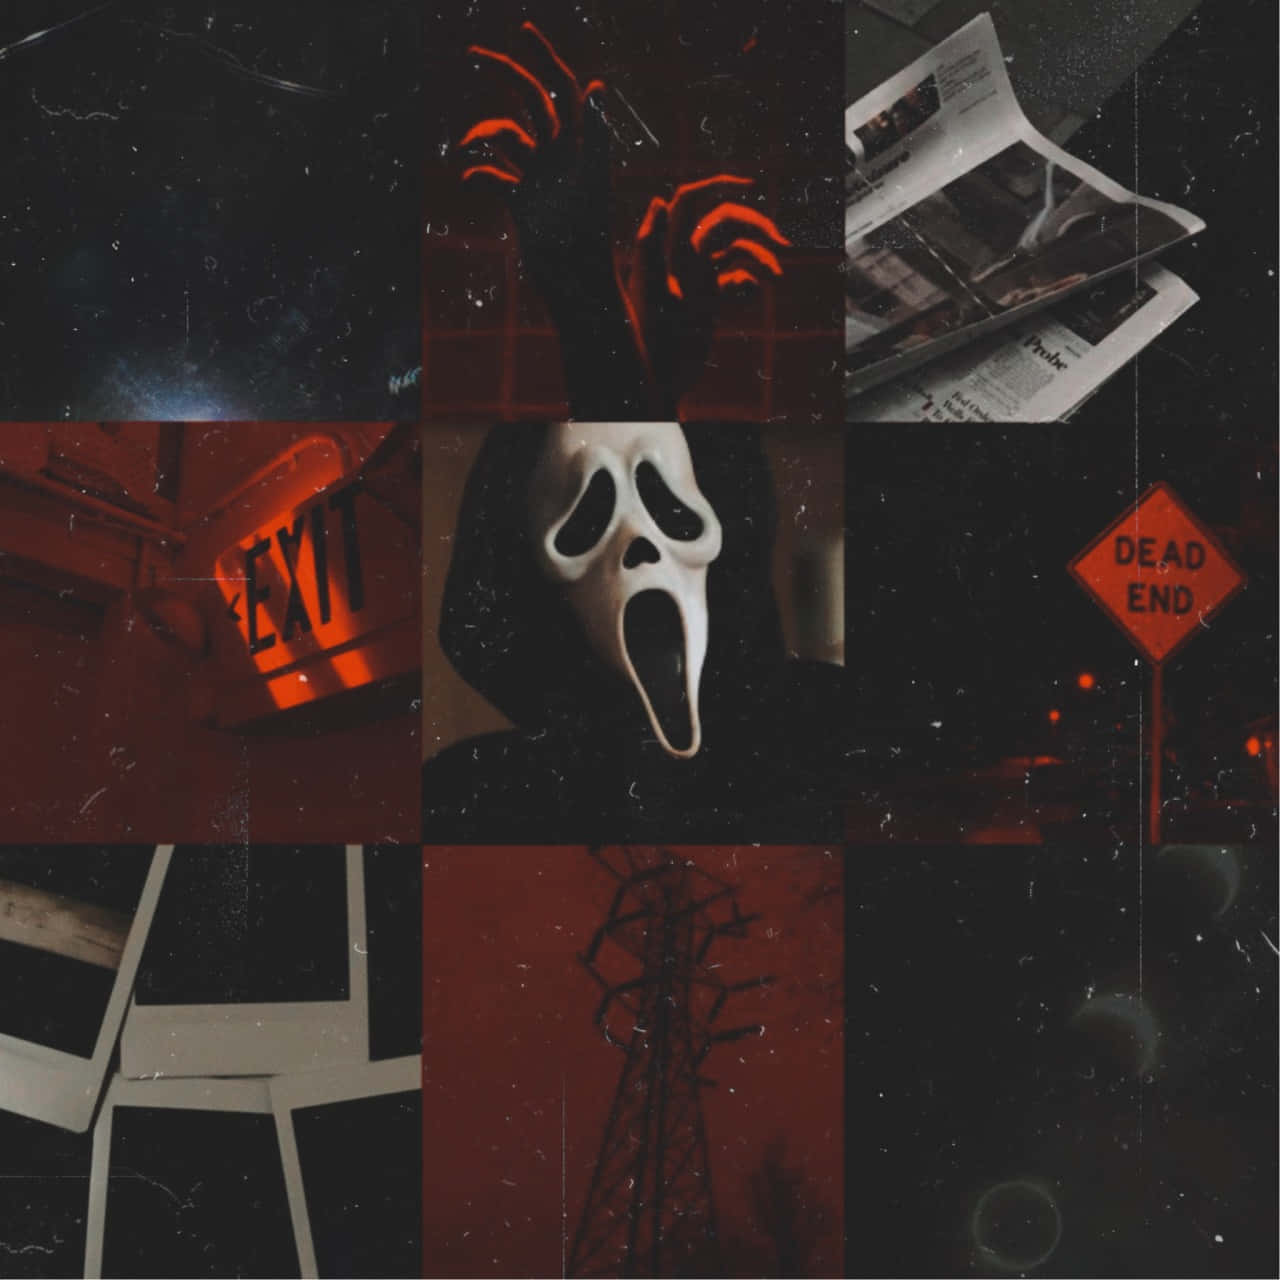 Scream Movie Aesthetic Collage Wallpaper